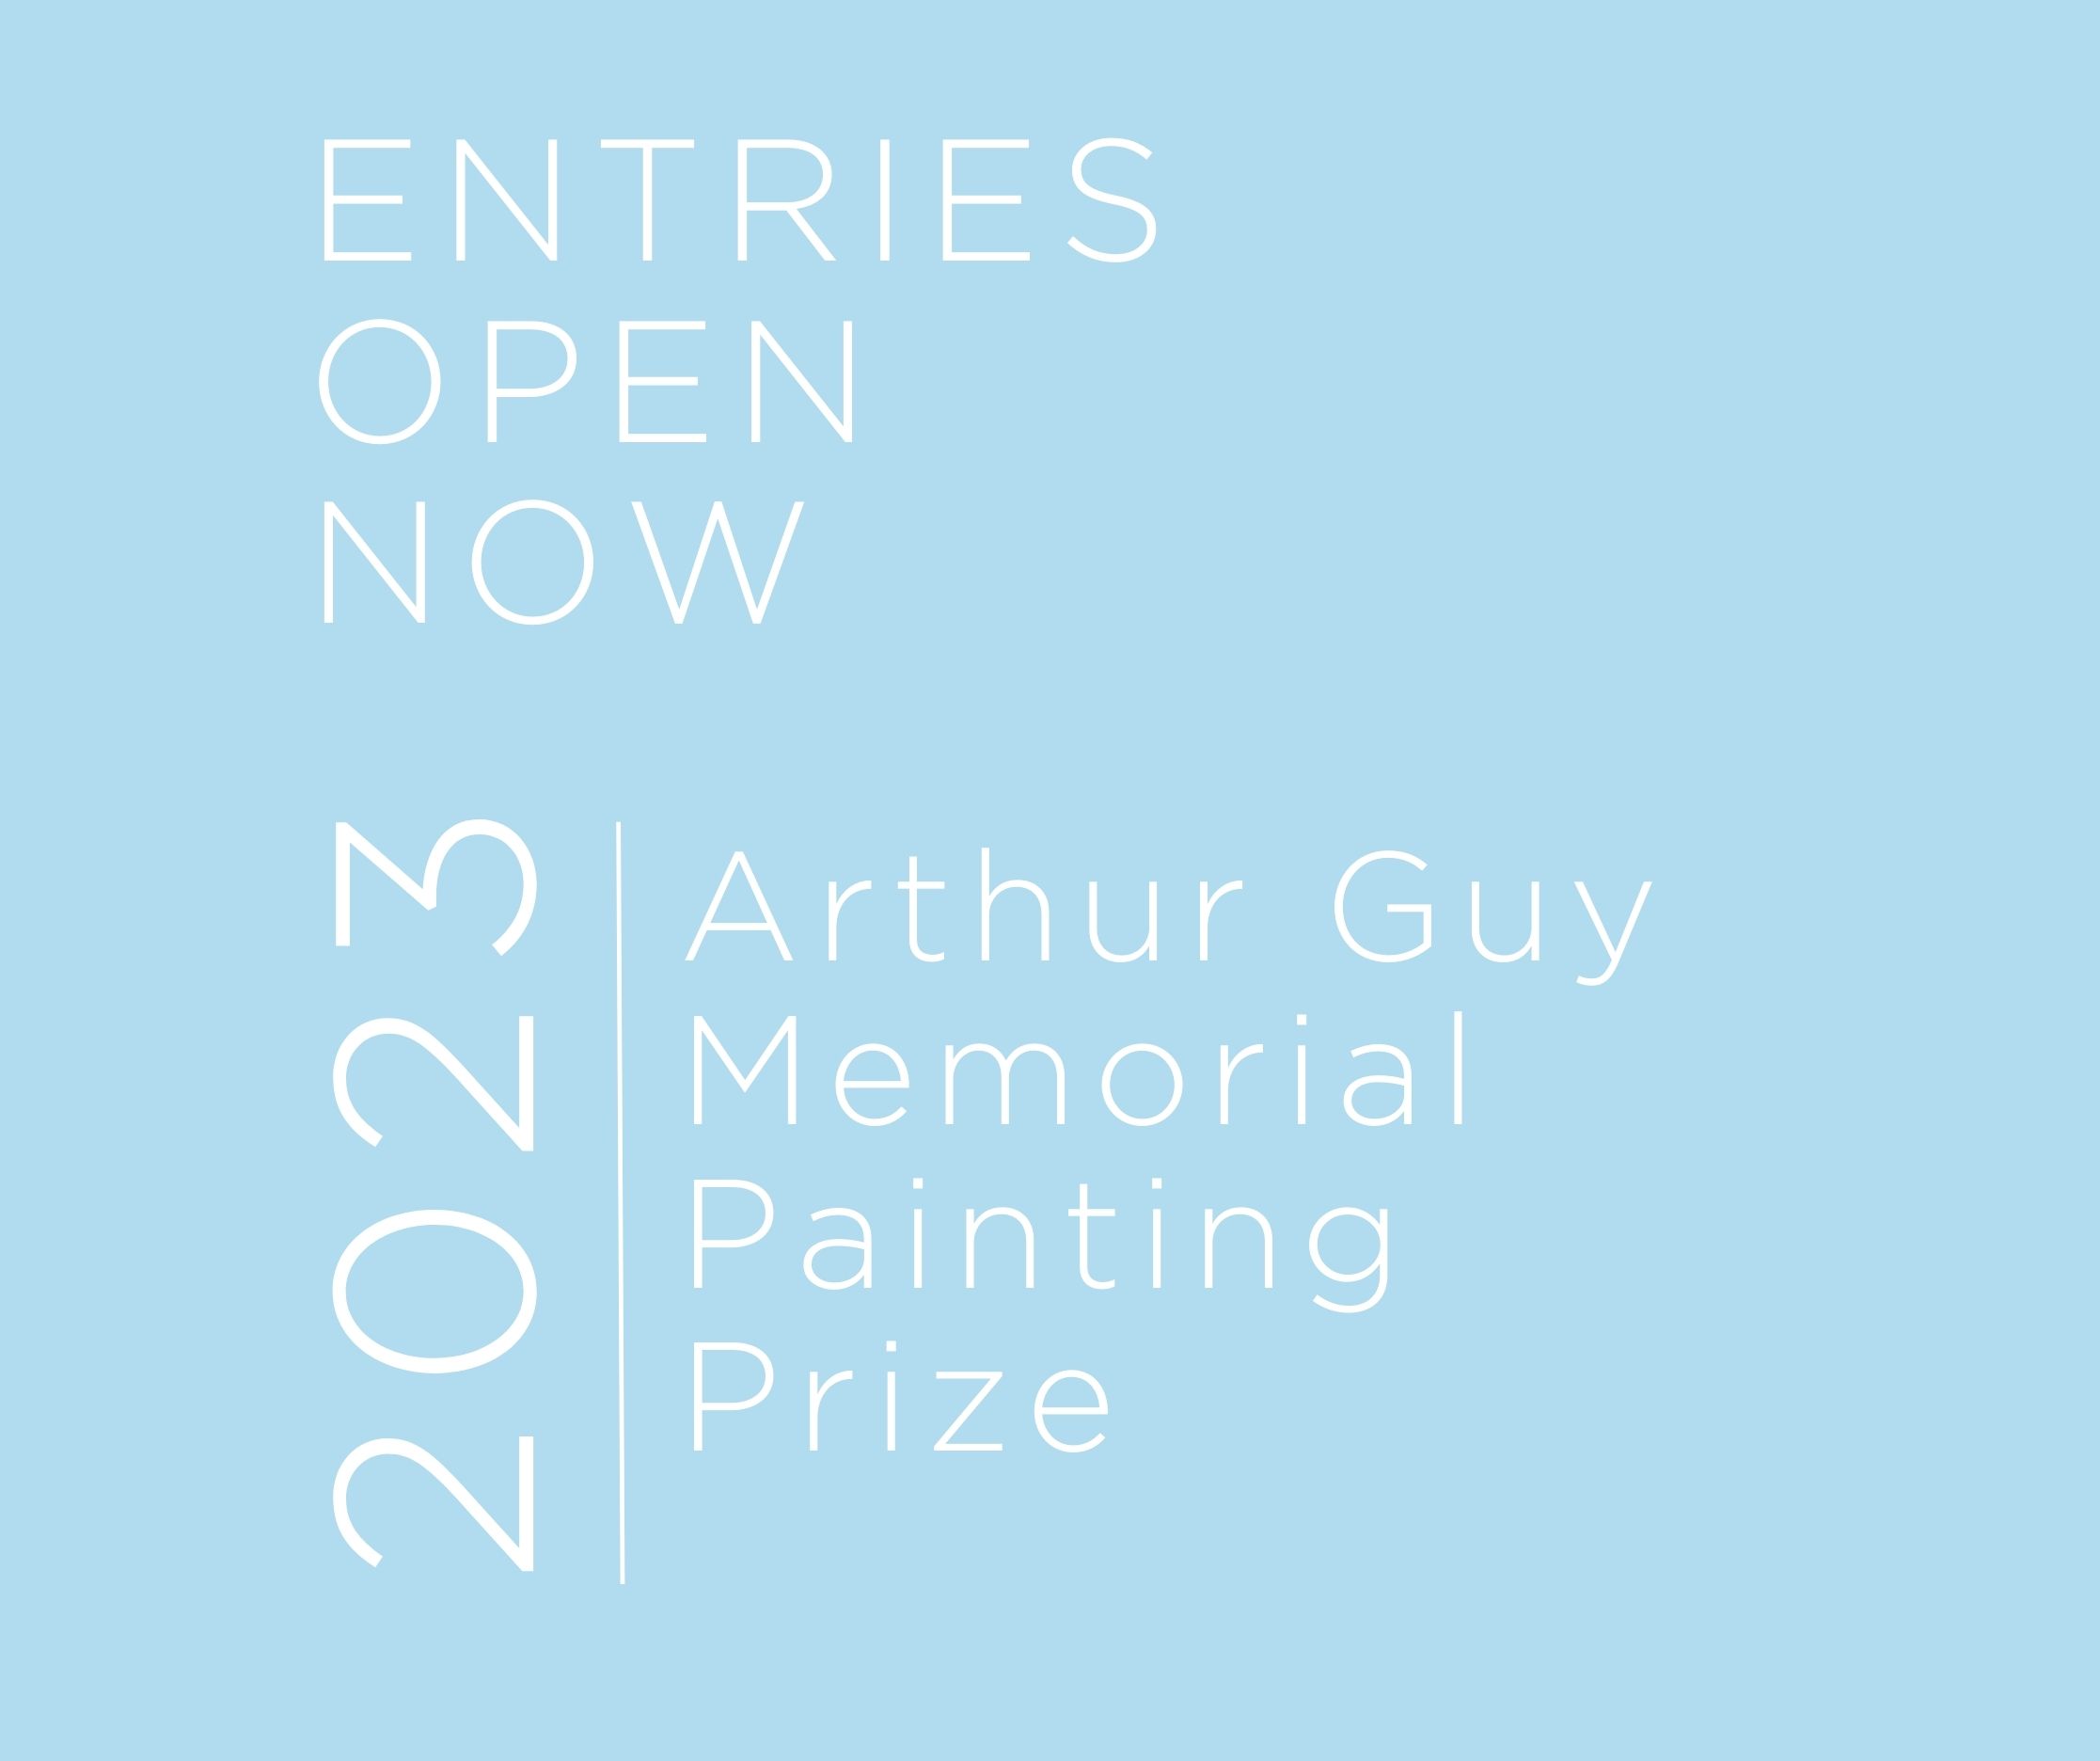 Arthur Guy Memorial Painting Prize